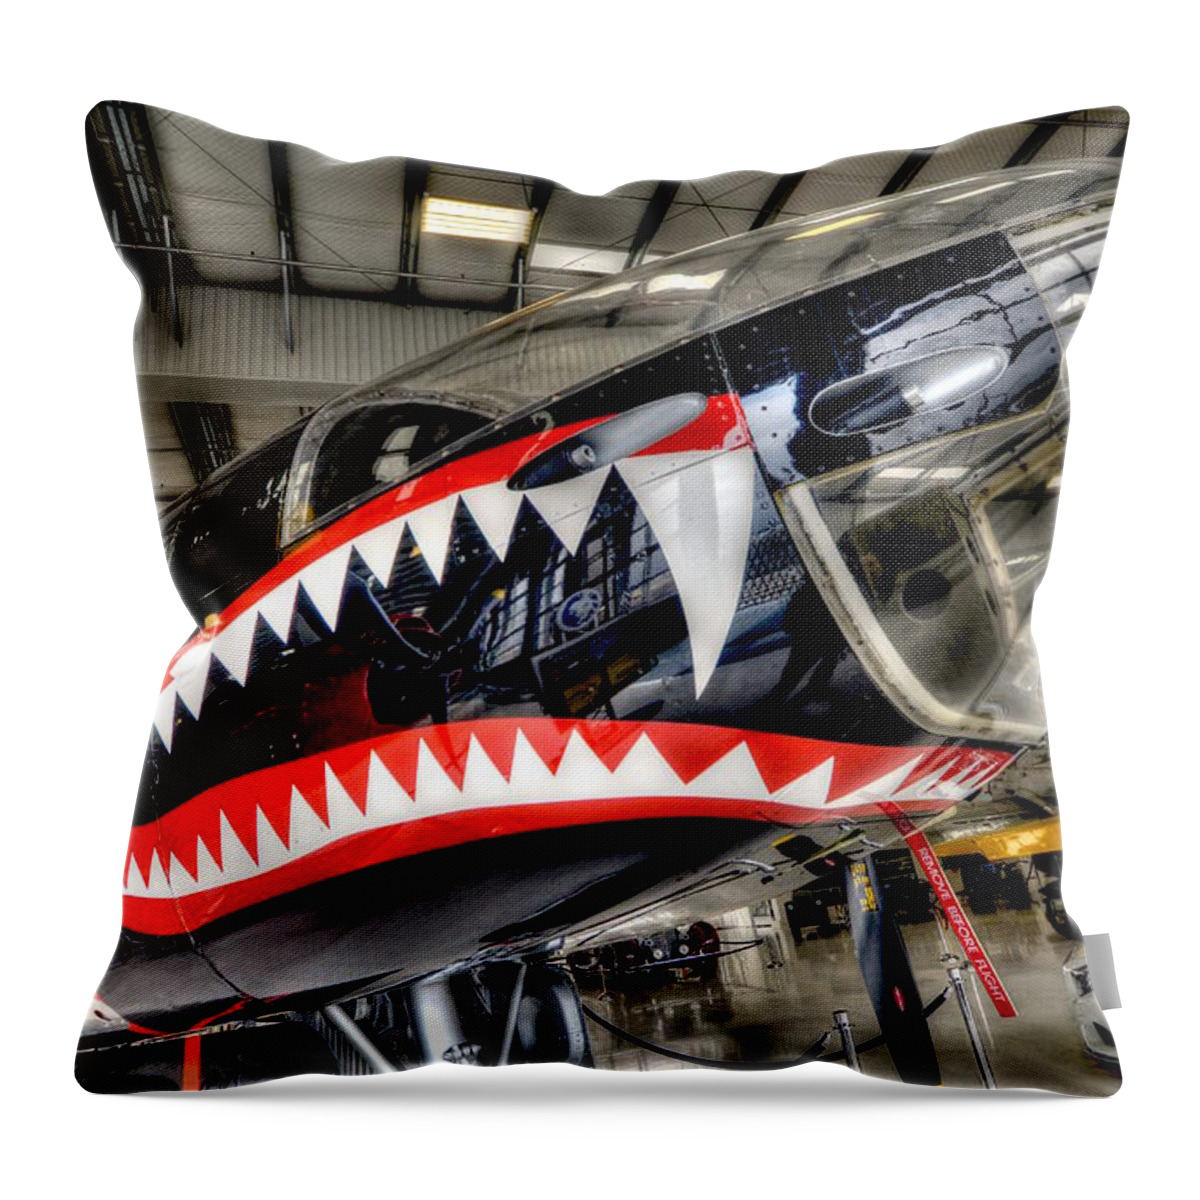 Plane Throw Pillow featuring the photograph Shark Bite by Craig Incardone